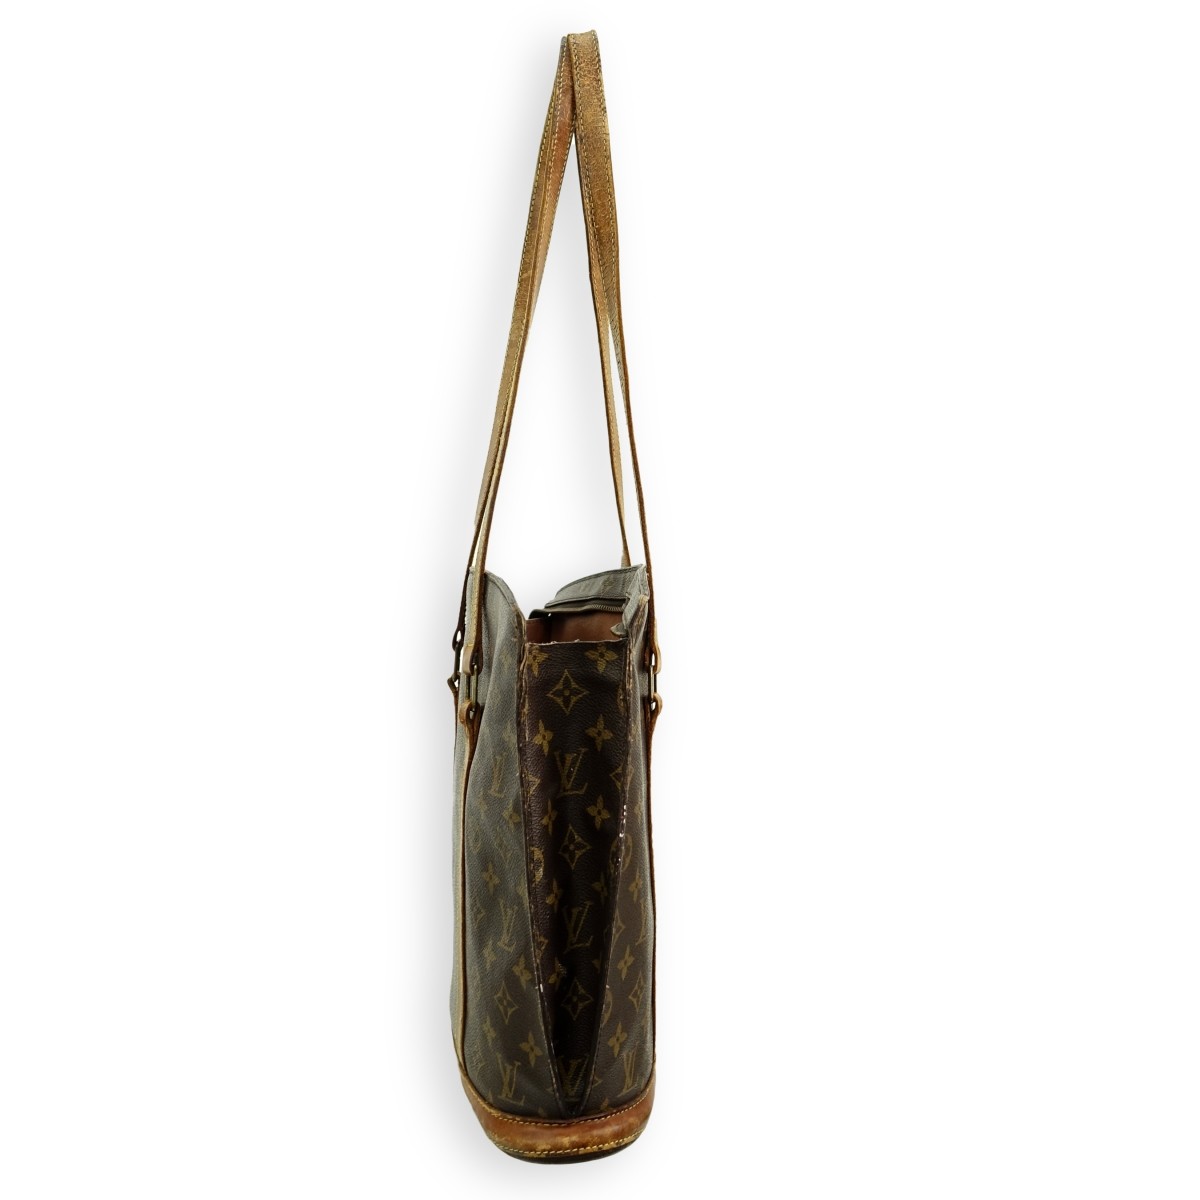 Louis Vuitton Babylone Tote Monogram Handbag